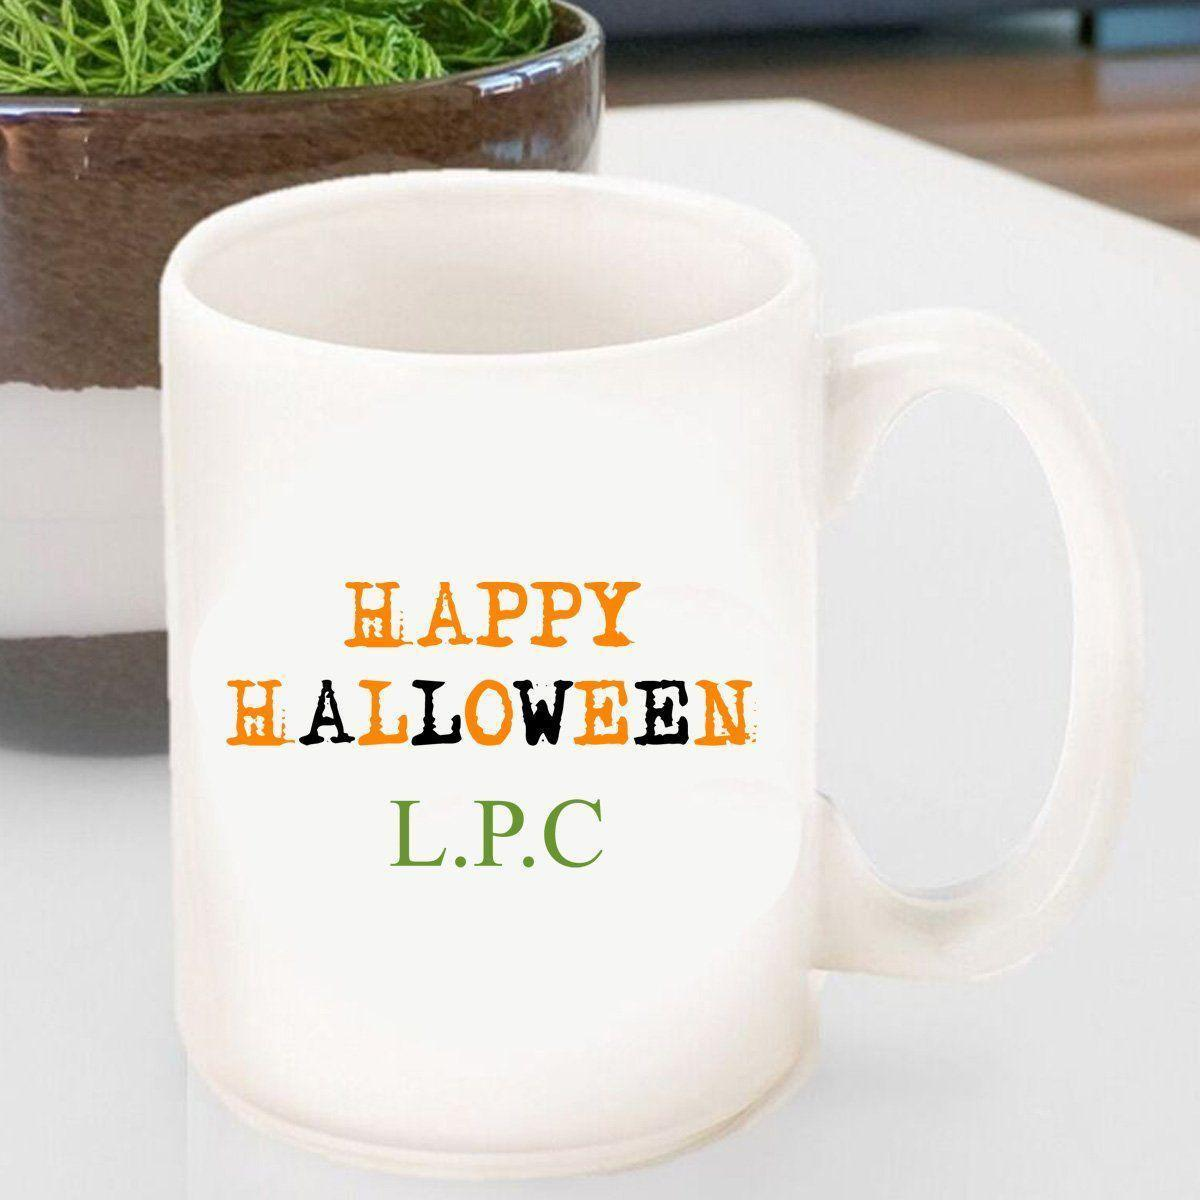 Personalized Halloween Coffee Mugs